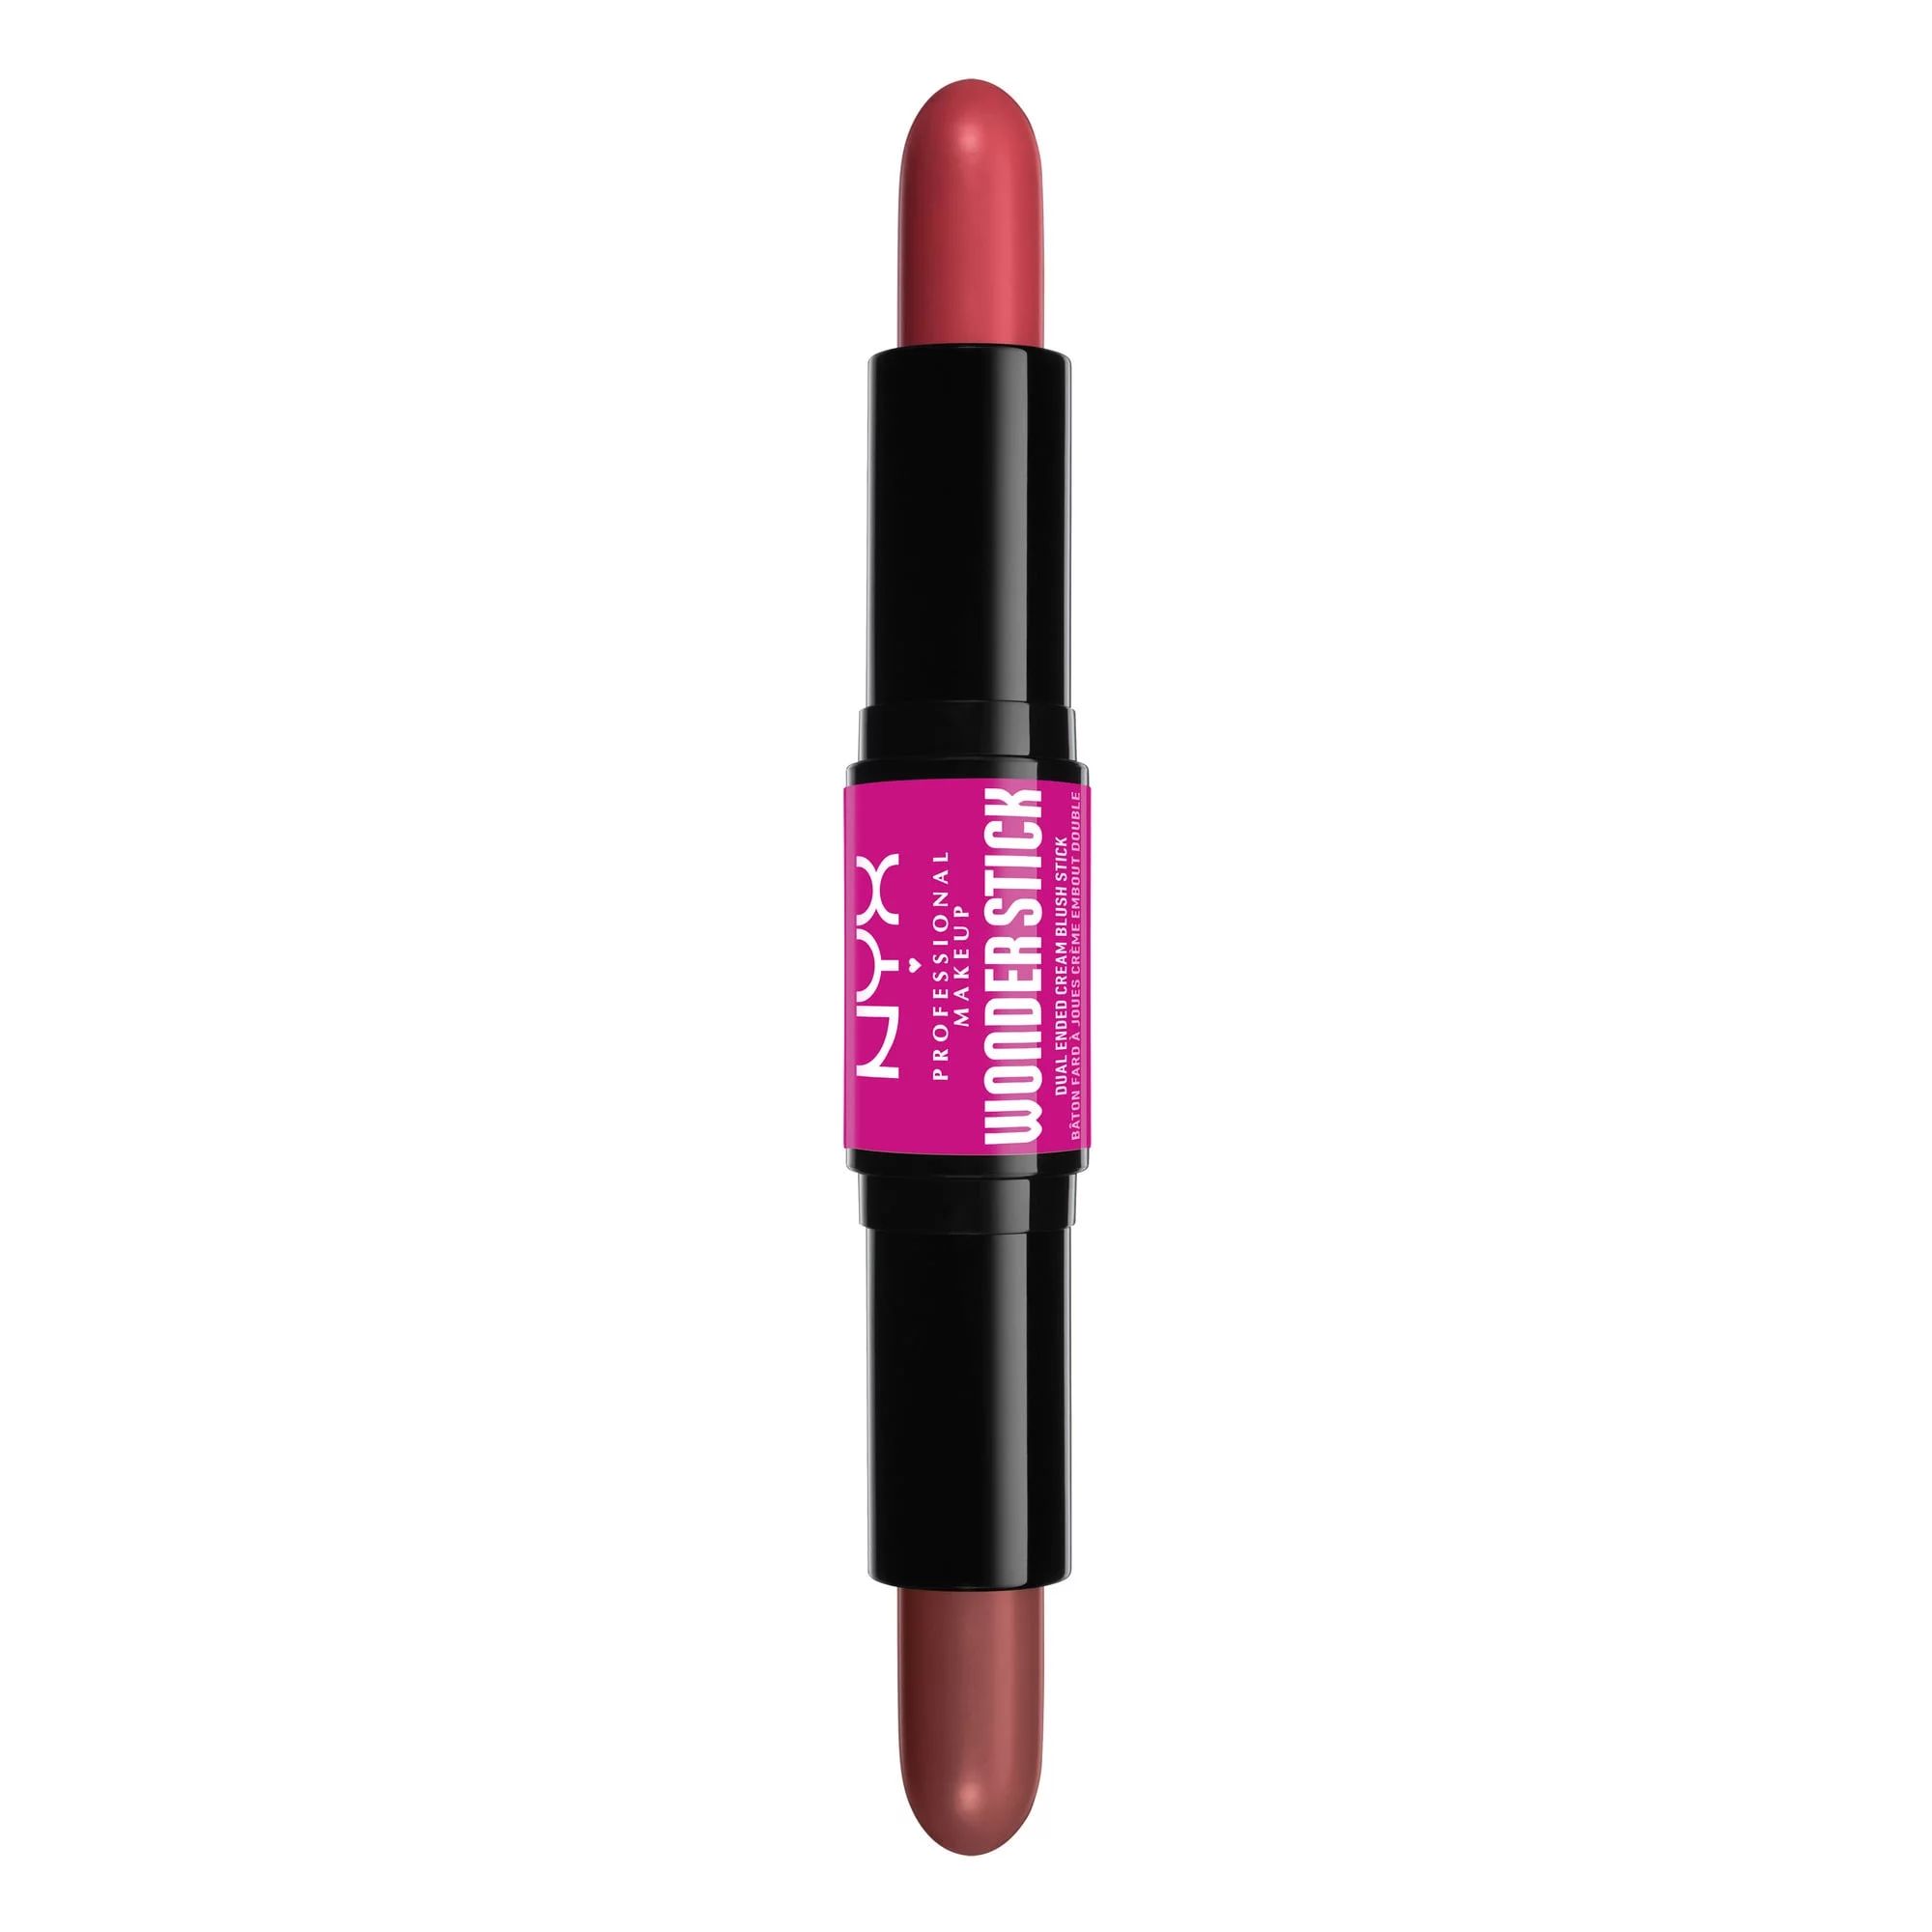 NYX Professional Makeup Wonder Stick Blush, Cream Blush Contour Stick, Coral + Deep Peach | Walmart (US)